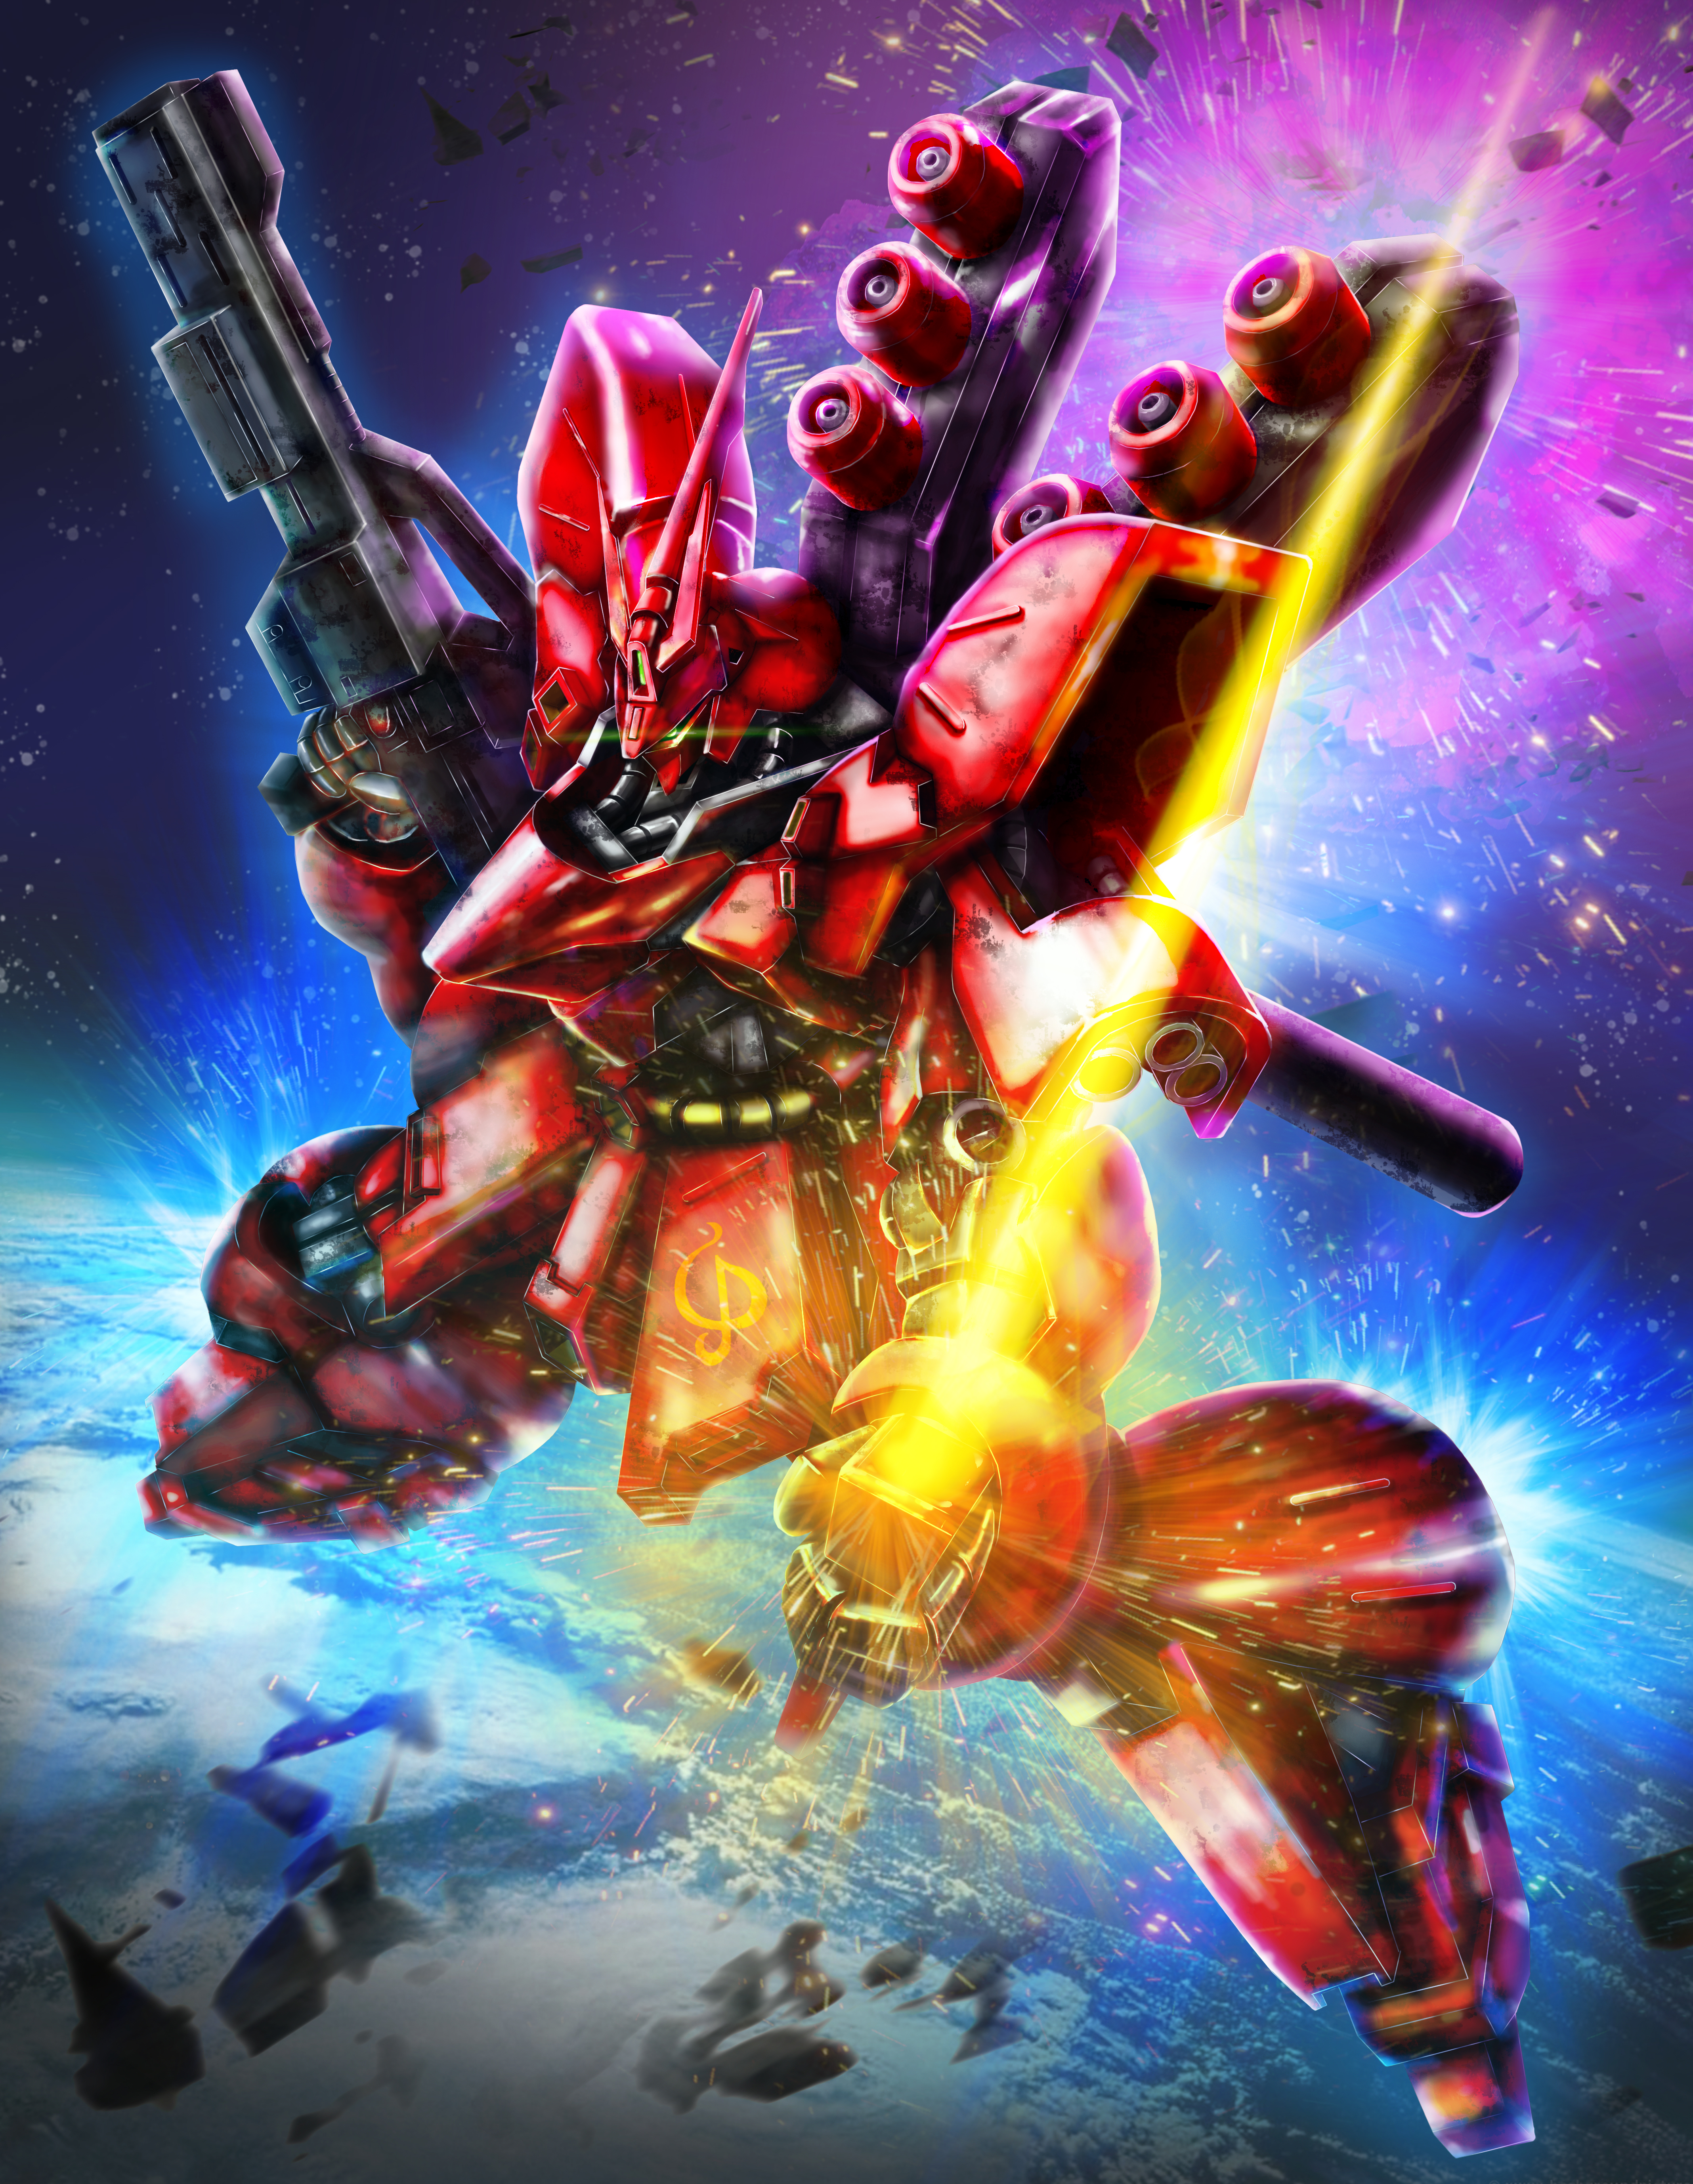 Anime Mobile Suit Mechs Sazabi Mobile Suit Gundam Chars Counterattack Super Robot Wars Artwork Digit 4272x5512